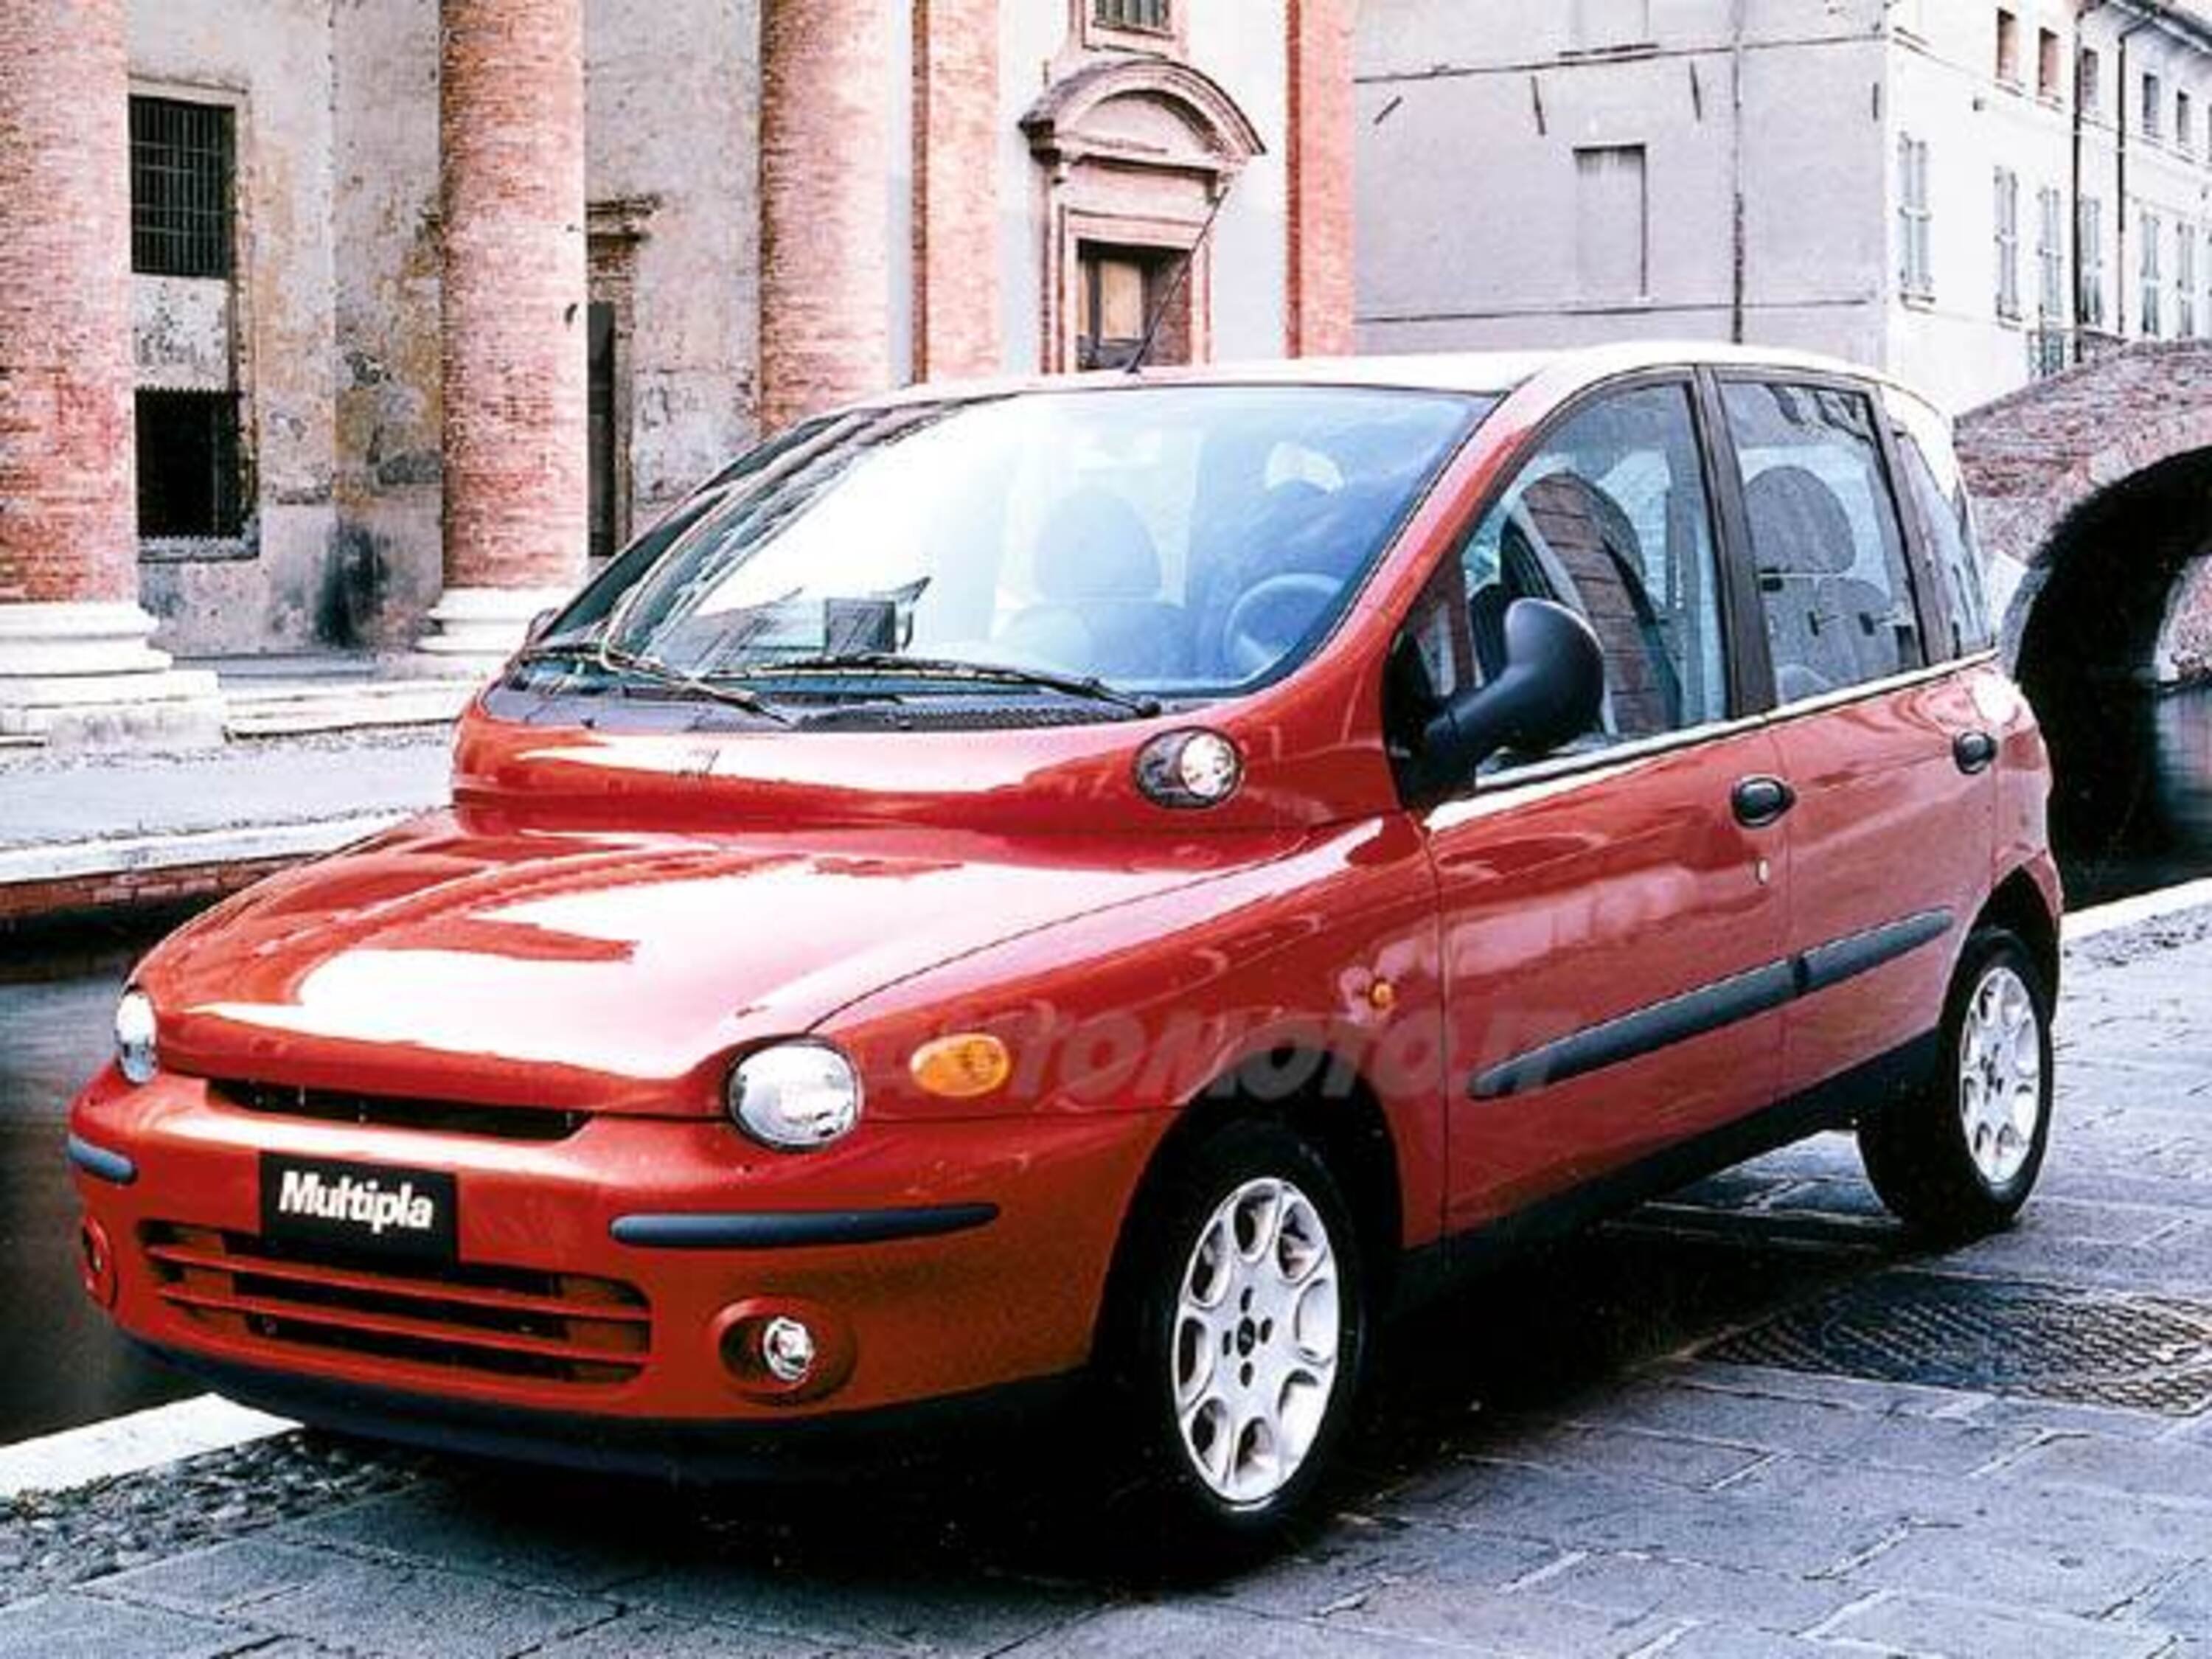 Fiat Multipla 105 JTD Serie Speciale